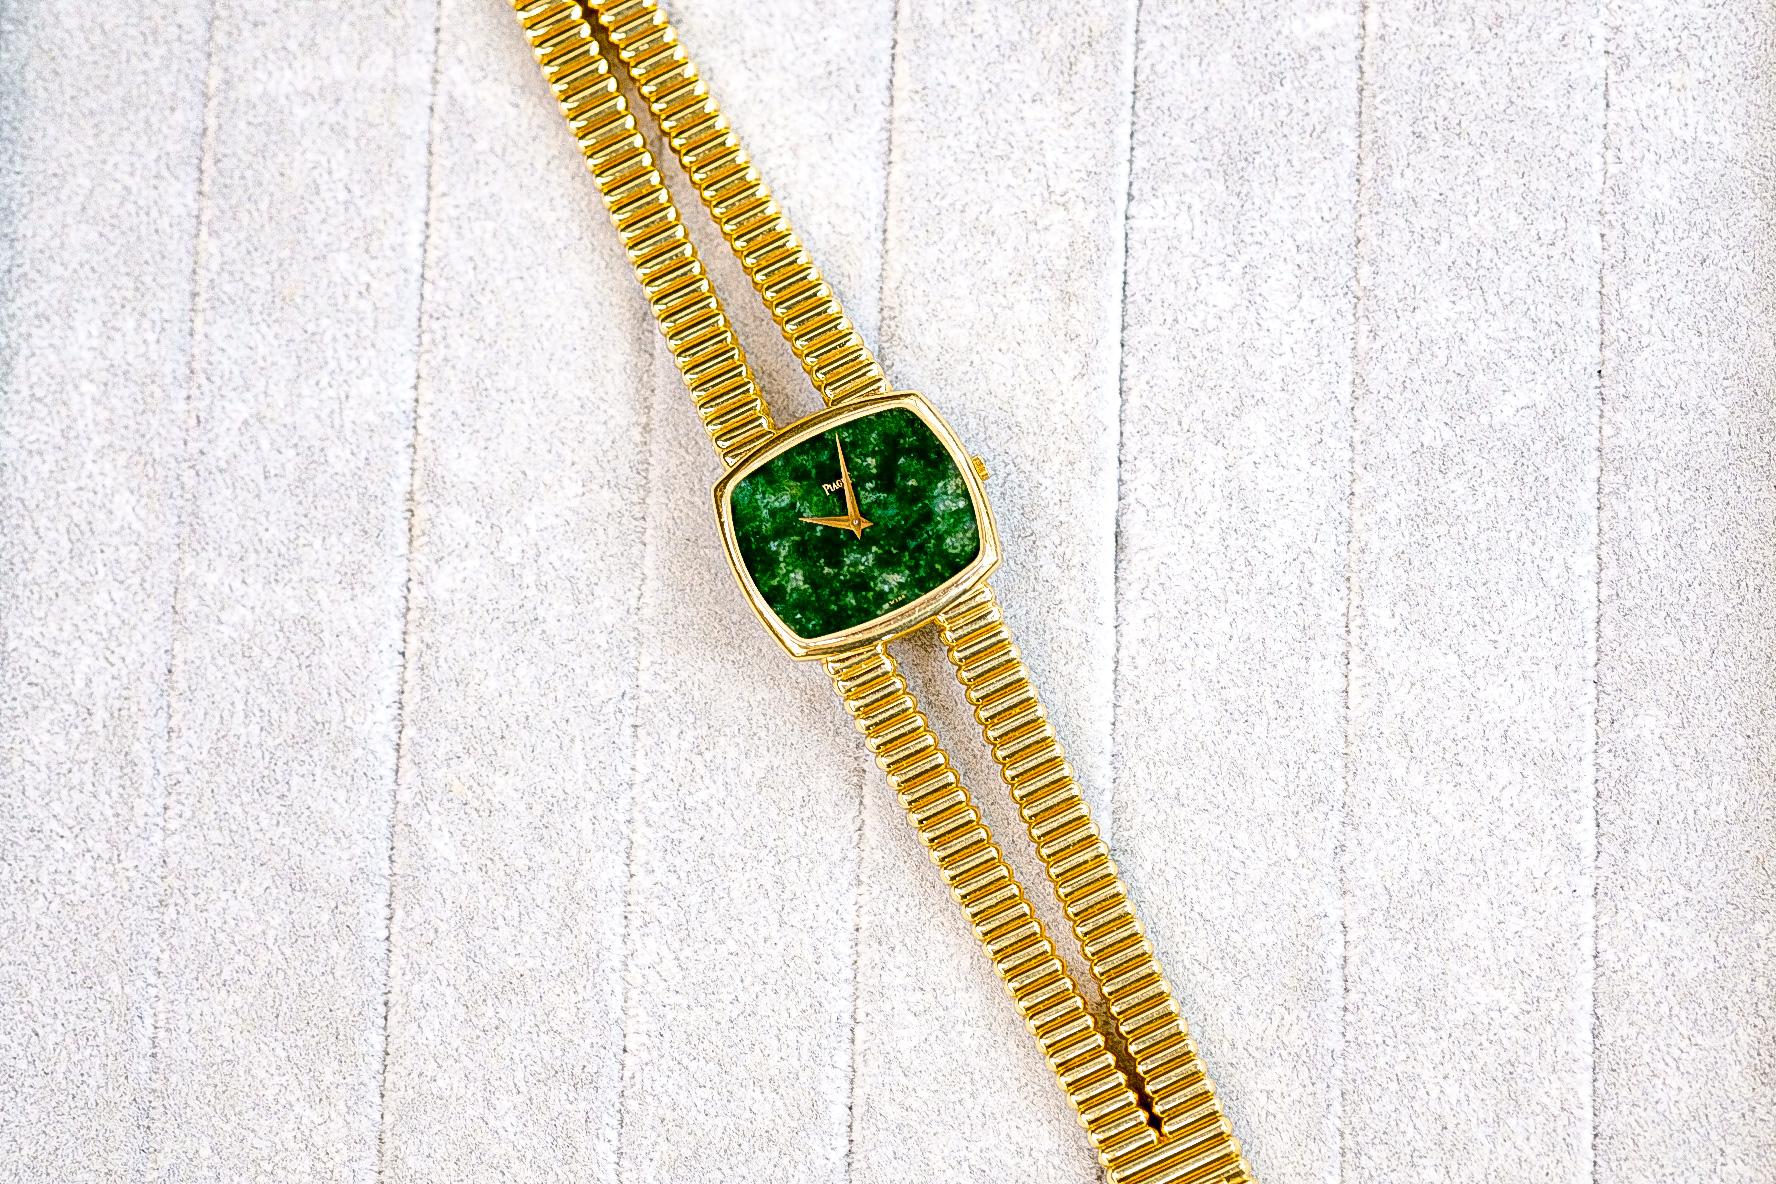 Modern Piaget 18K Yellow Gold 1970's Vintage Ref 9731 Mechanical Wrist Watch